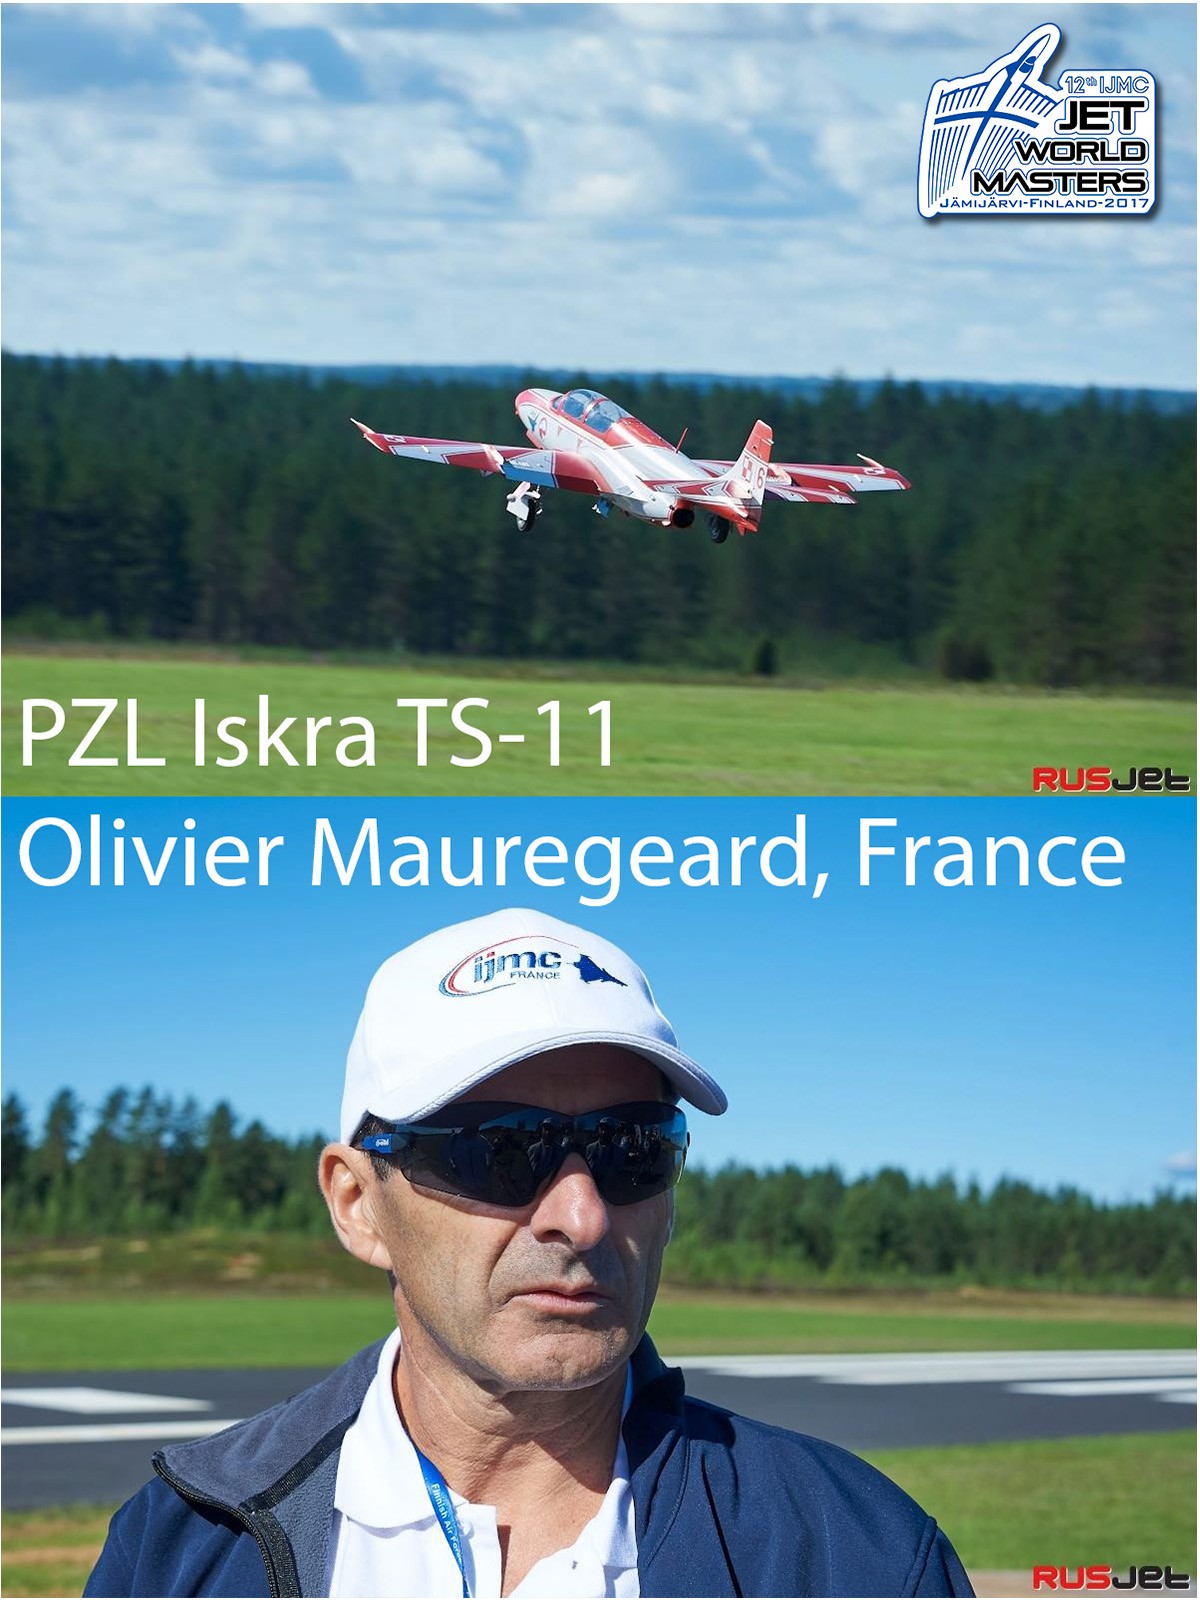 France Olivier Mauregeard.jpg(263 KB)